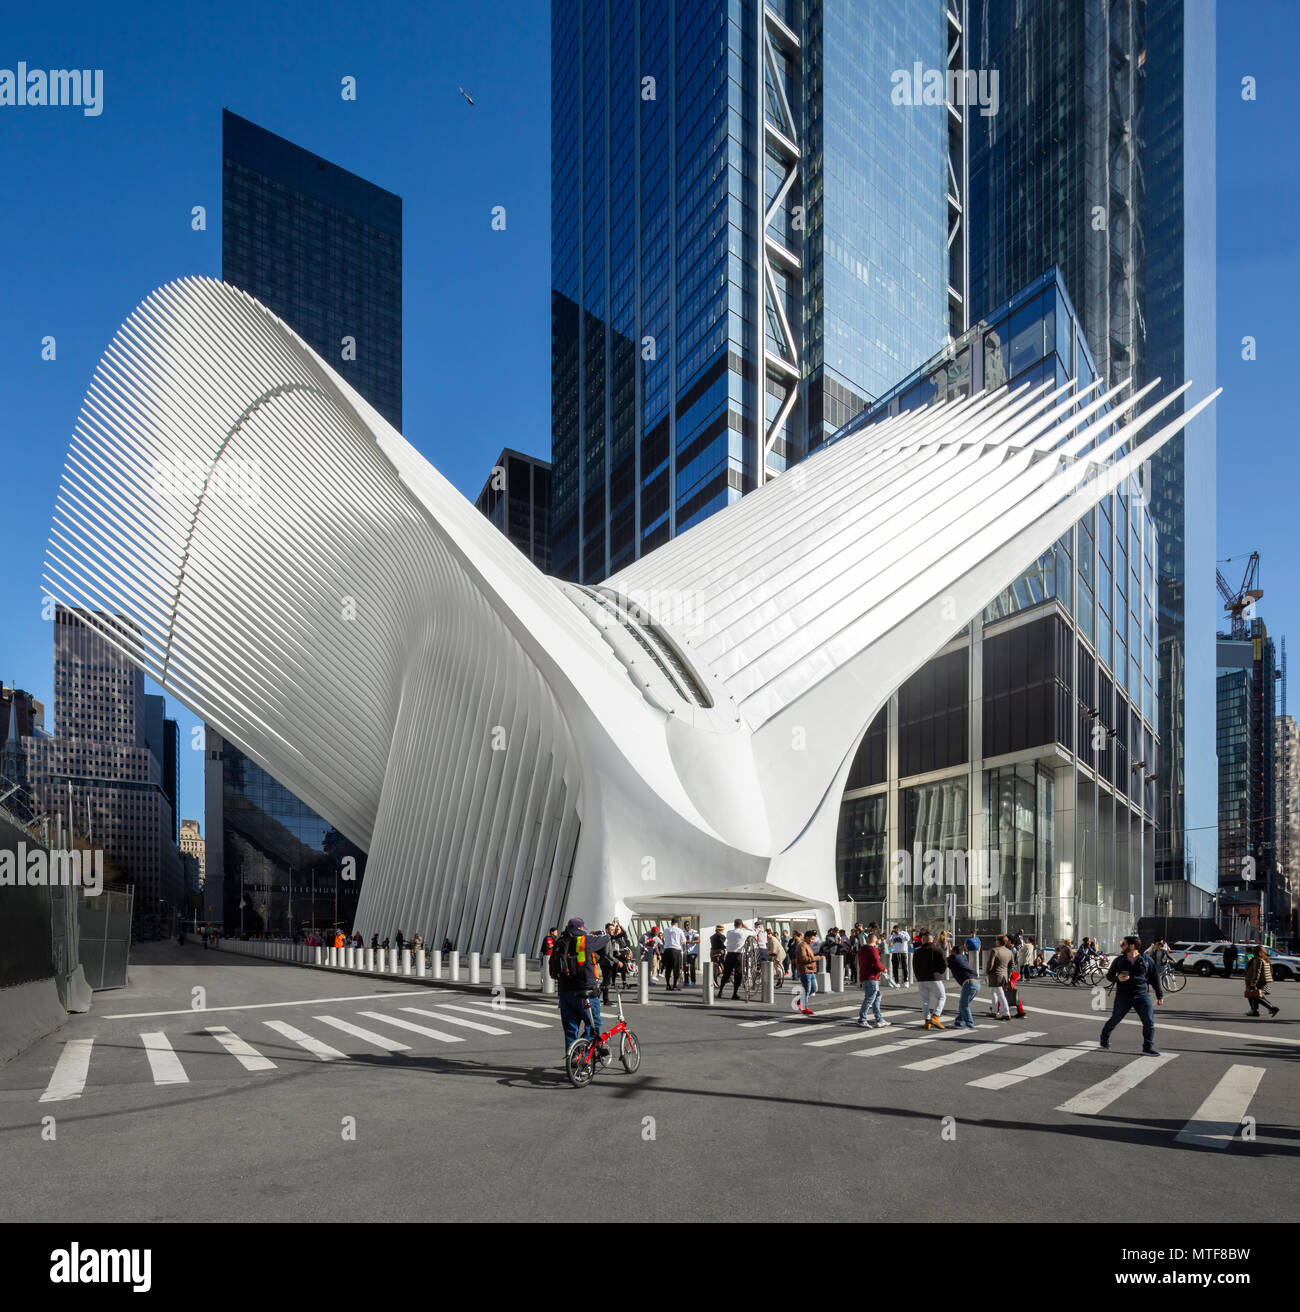 The Oculus World Trade Center Transportation Hub at Ground Zero in Lower  Manhattan, NYC oculus new york Stock Photo - Alamy